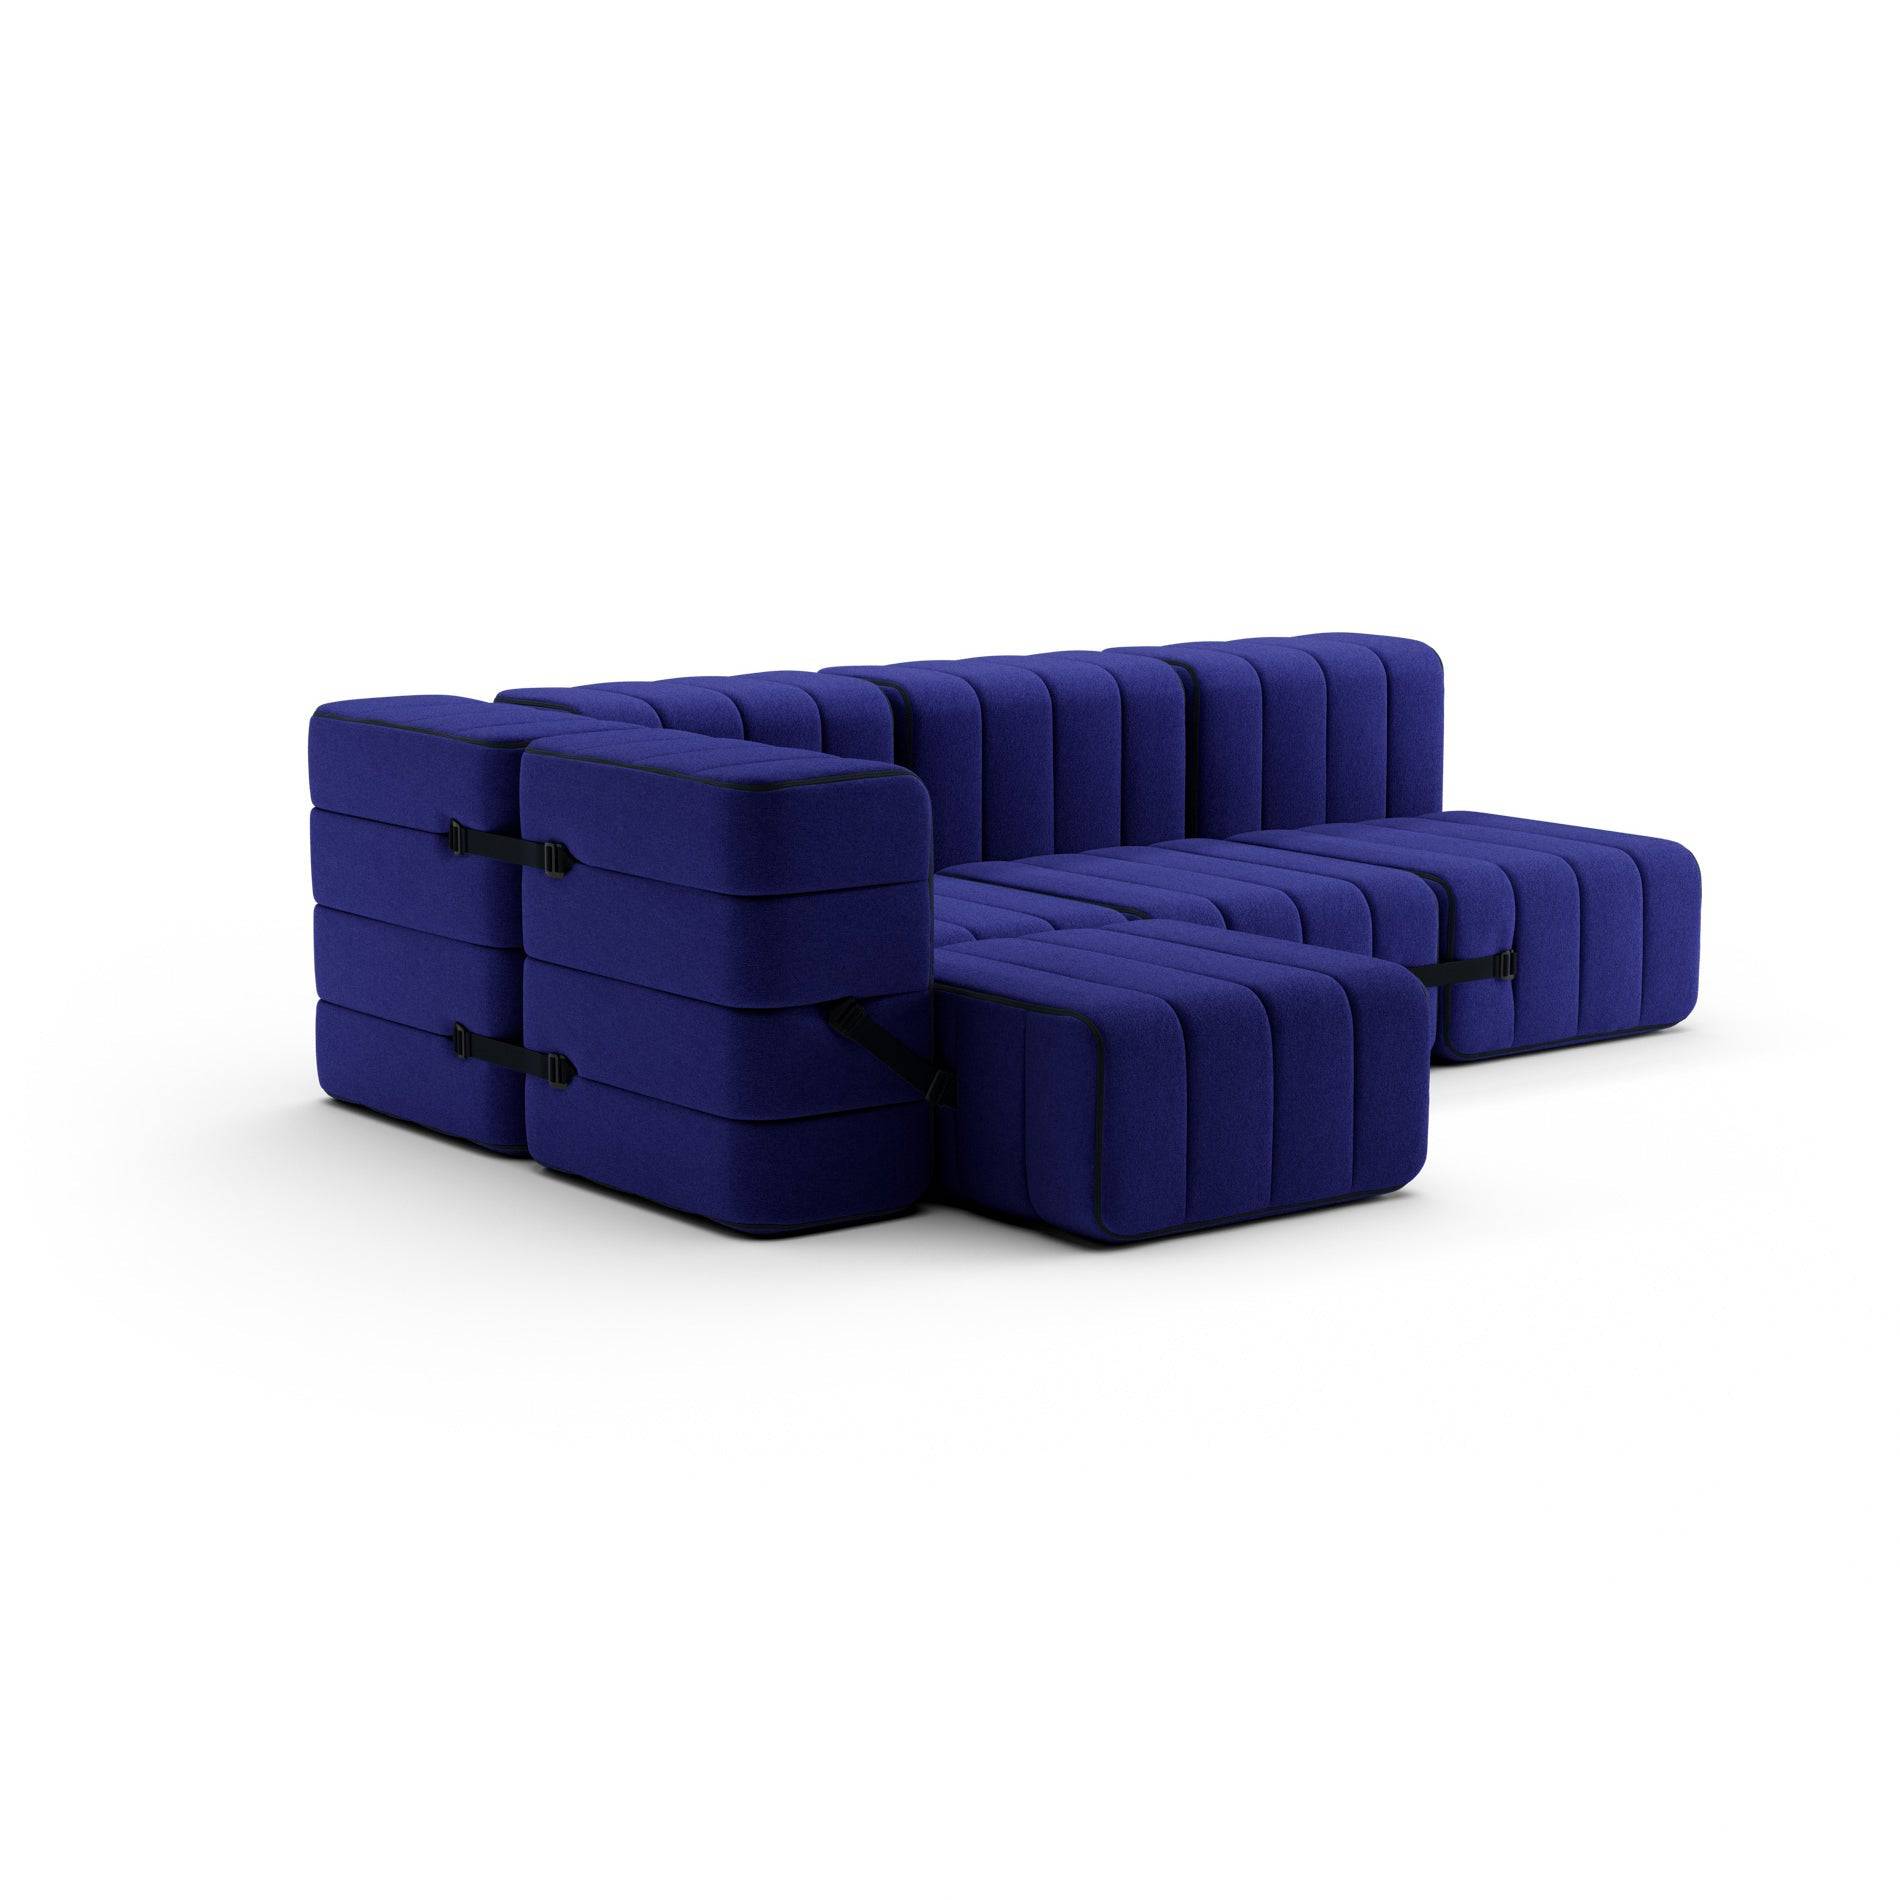 Curt Sofa System - Jet Blue Violett - THAT COOL LIVING